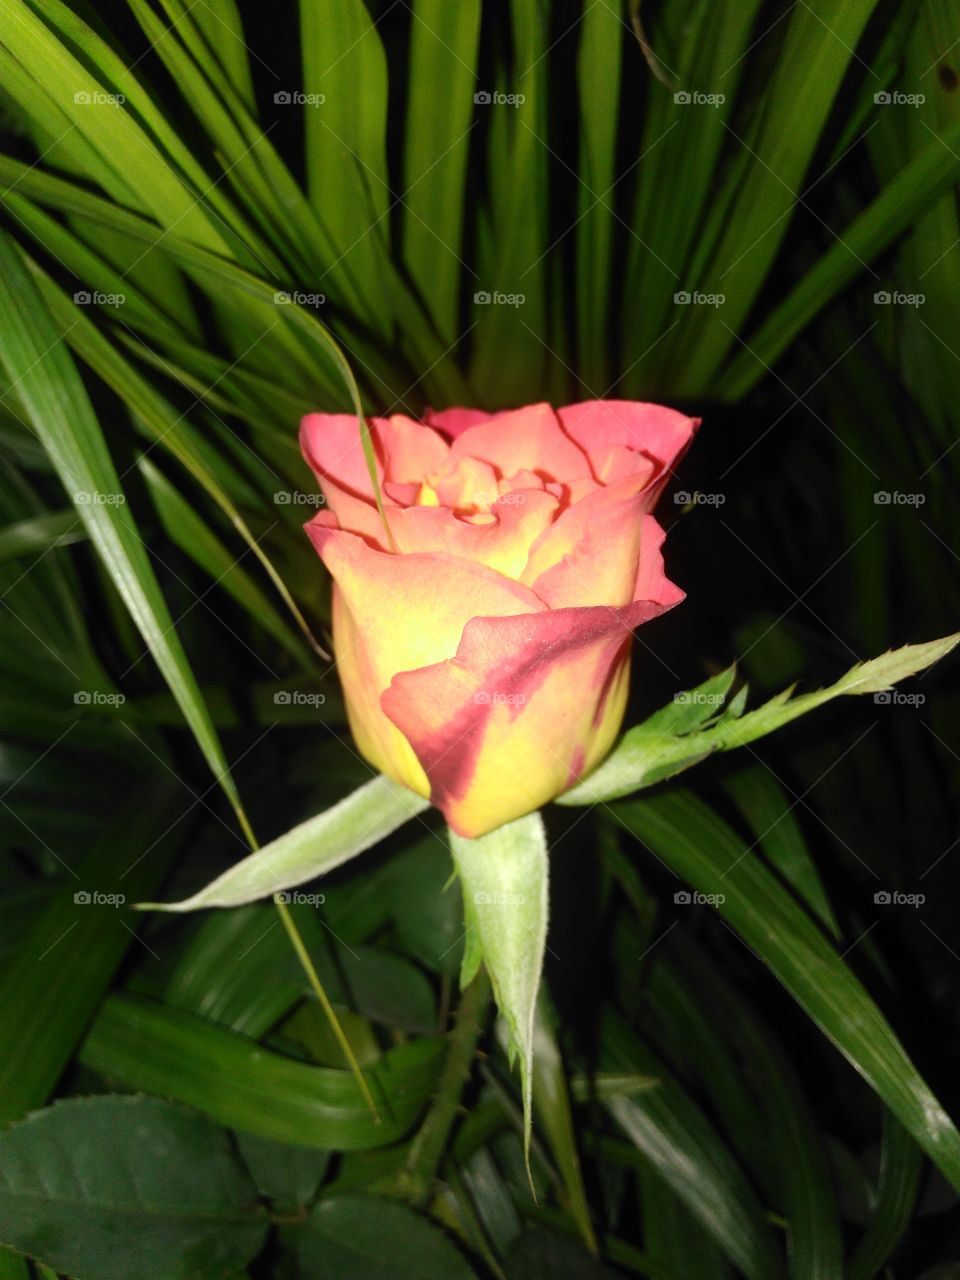 Hybrid Rose
reddish yellow Rose